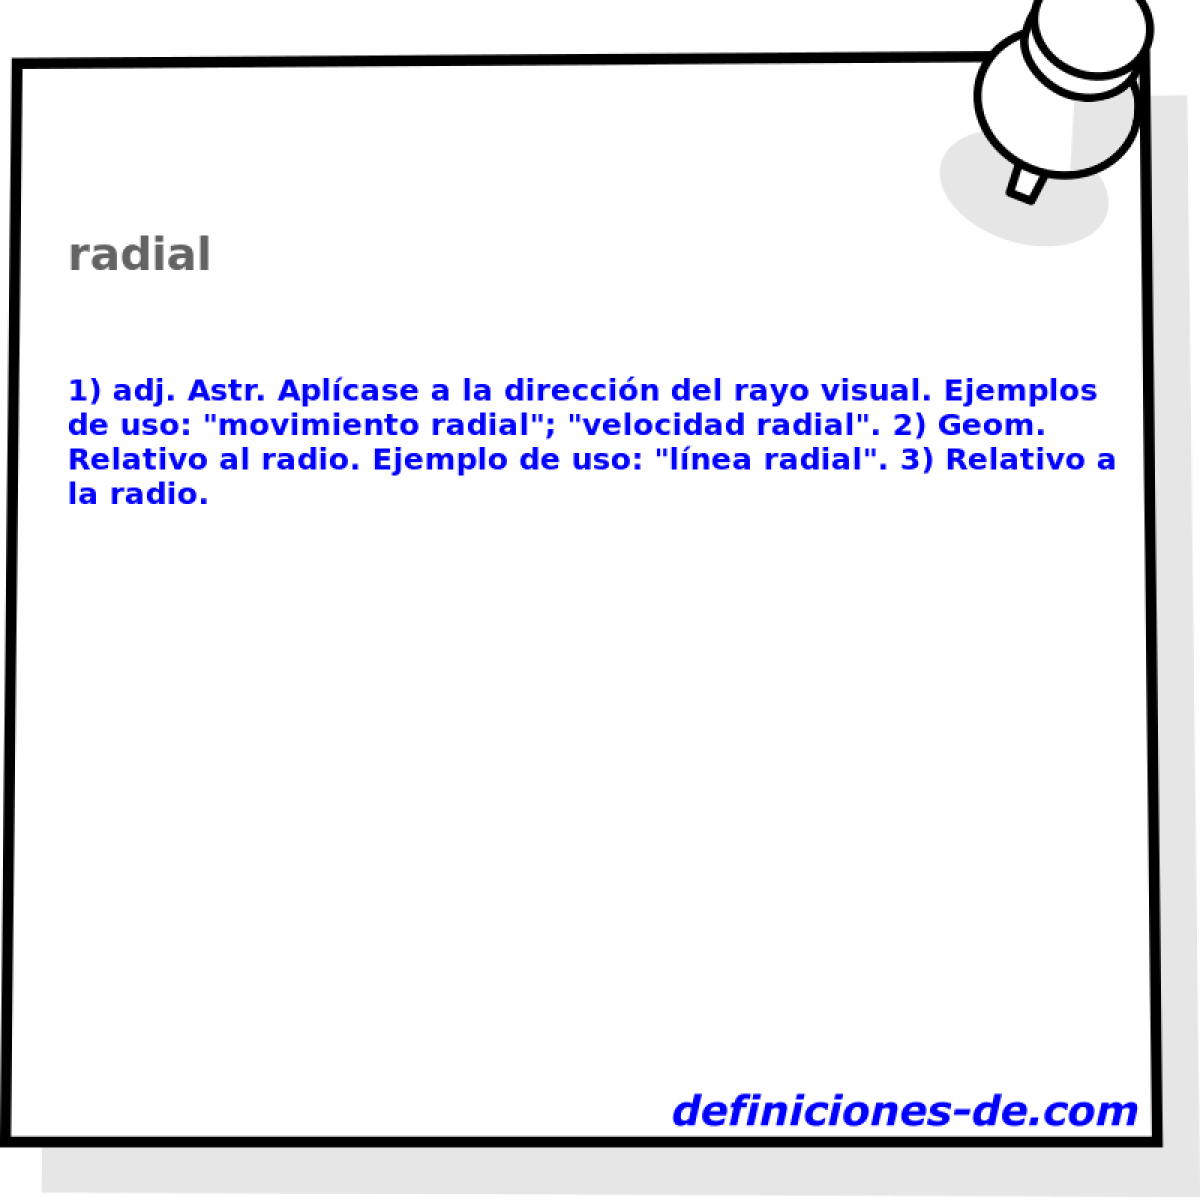 radial 